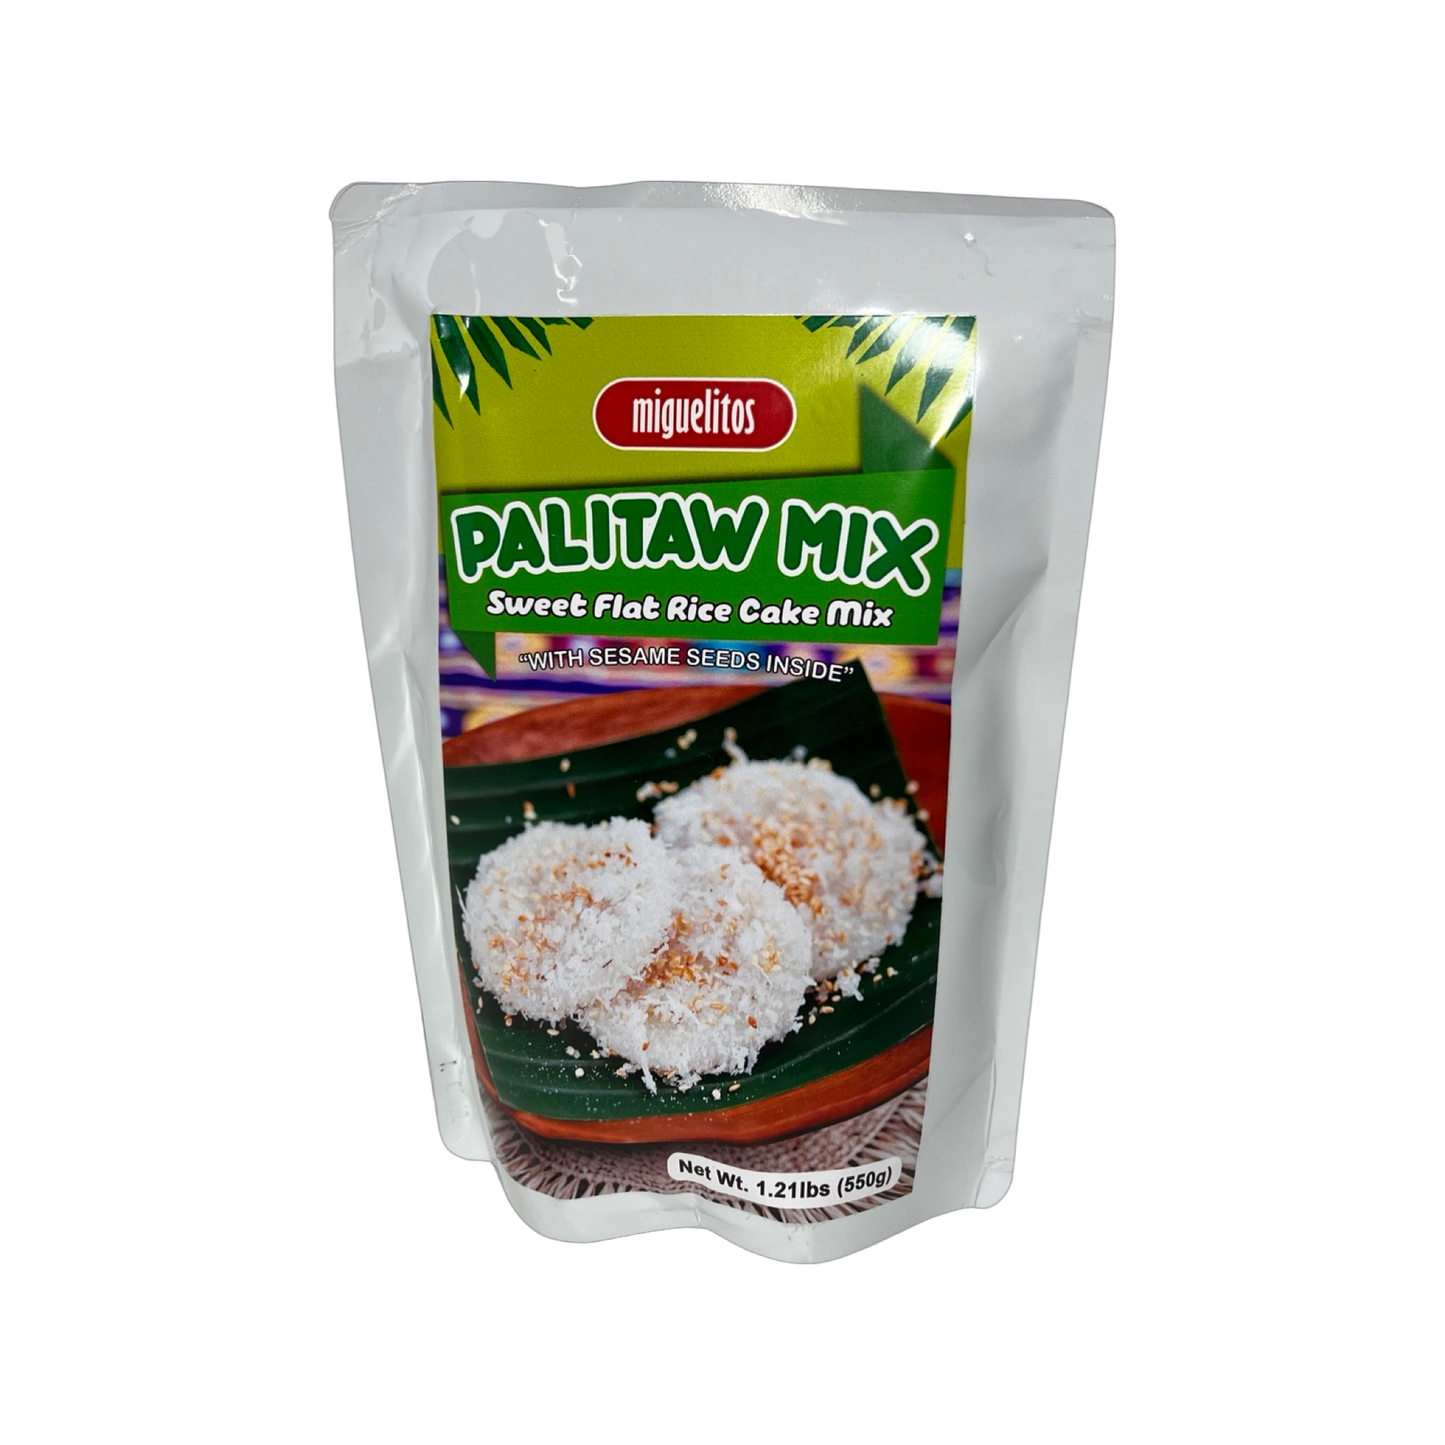 Miguelitos Palitaw Mix Sweet Flat Rice Cake Mix with Sesame Seeds Inside 550g